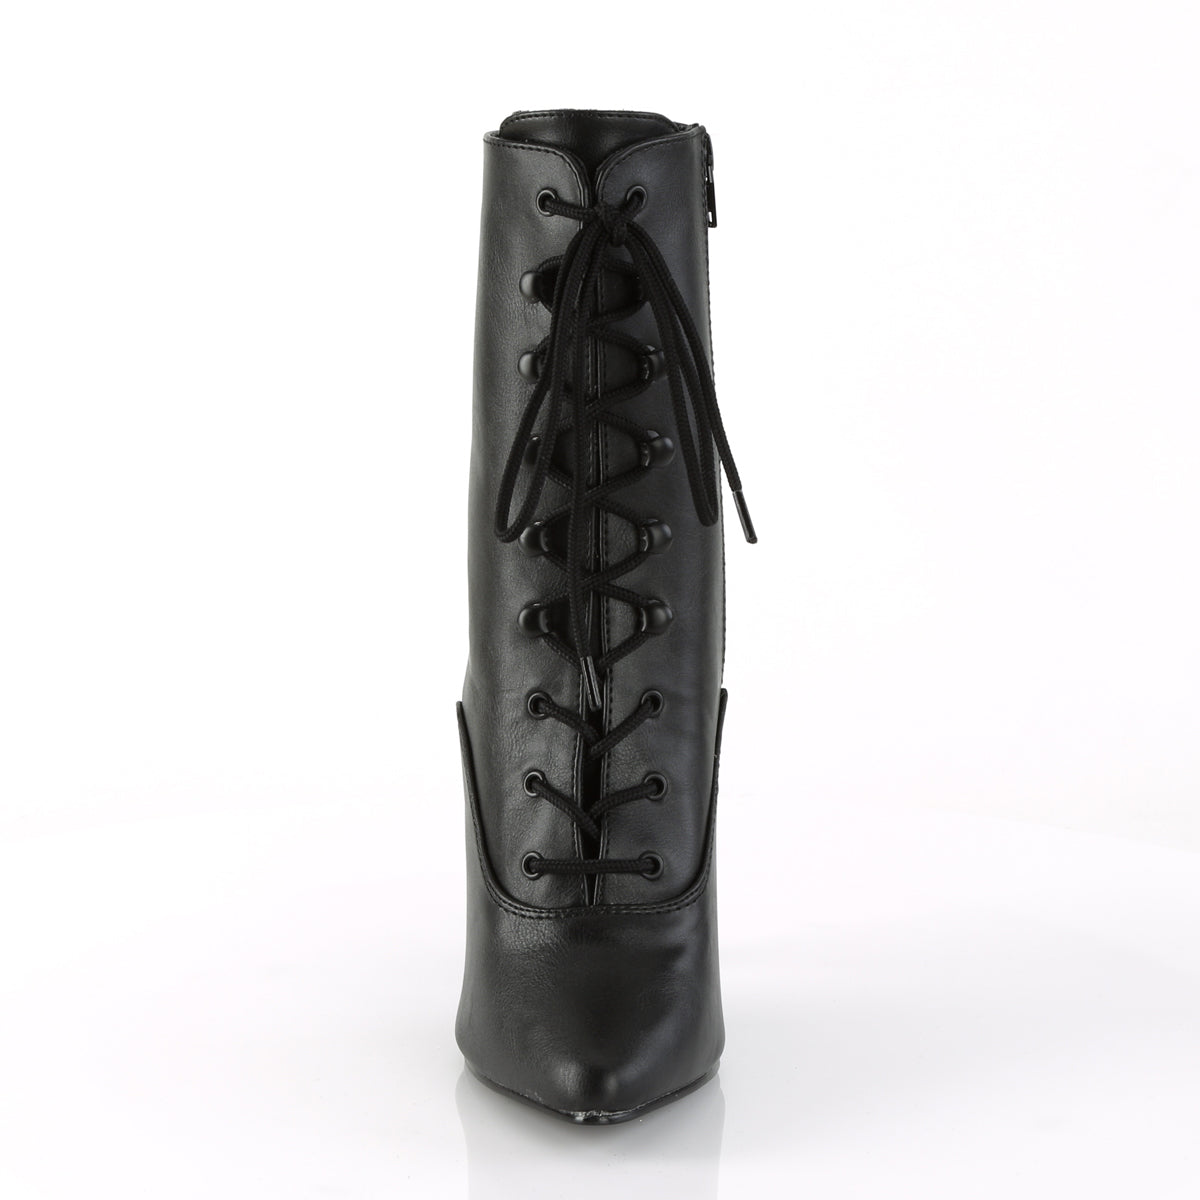 Pleaser Womens Ankle Boots SEDUCE-1020 Blk Faux Leather